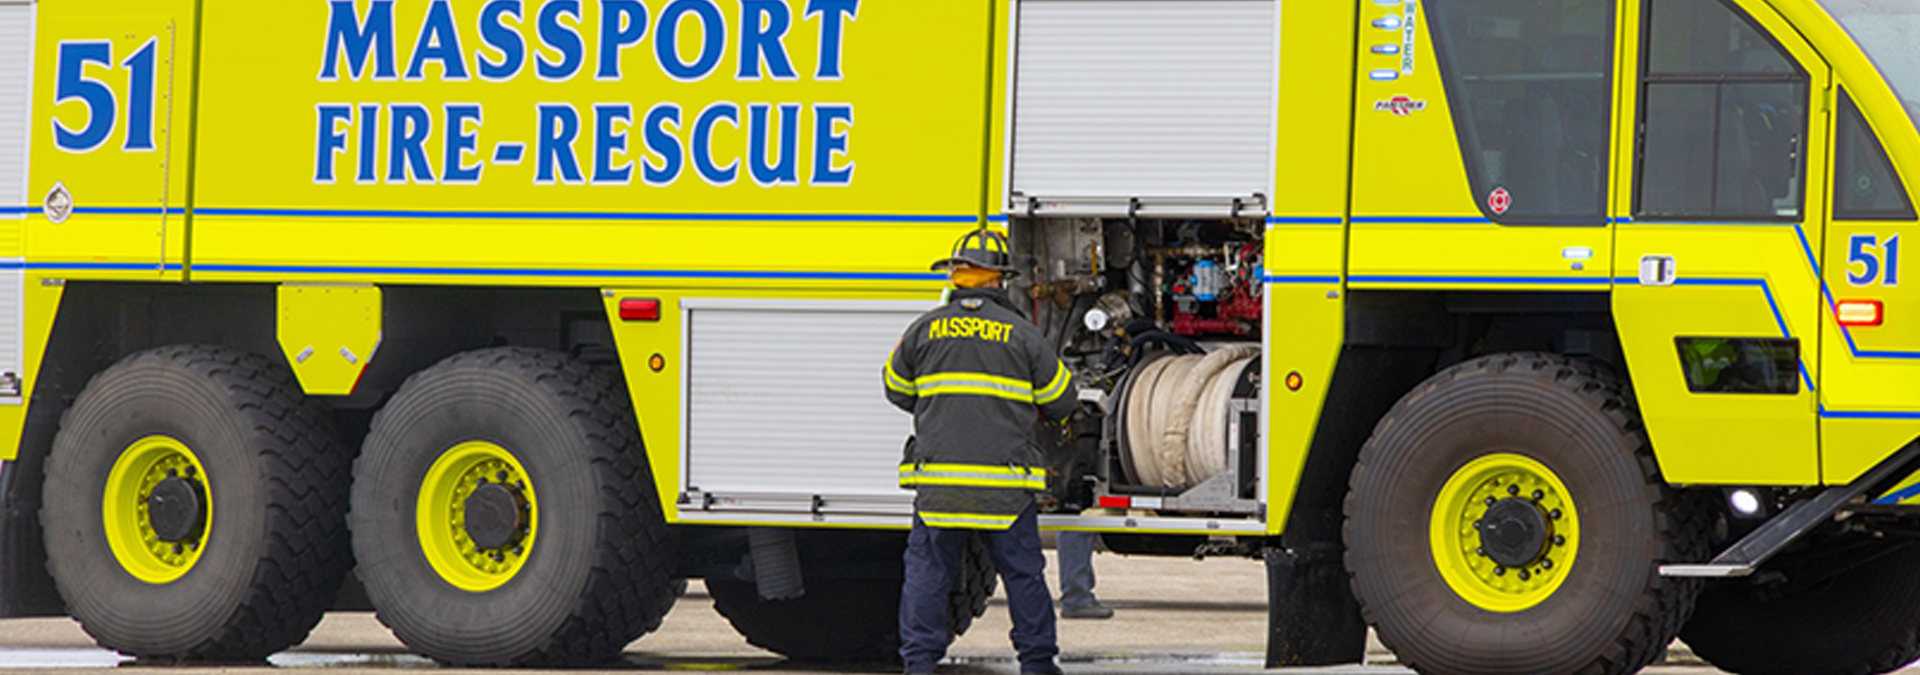 Massport Fire Rescue truck